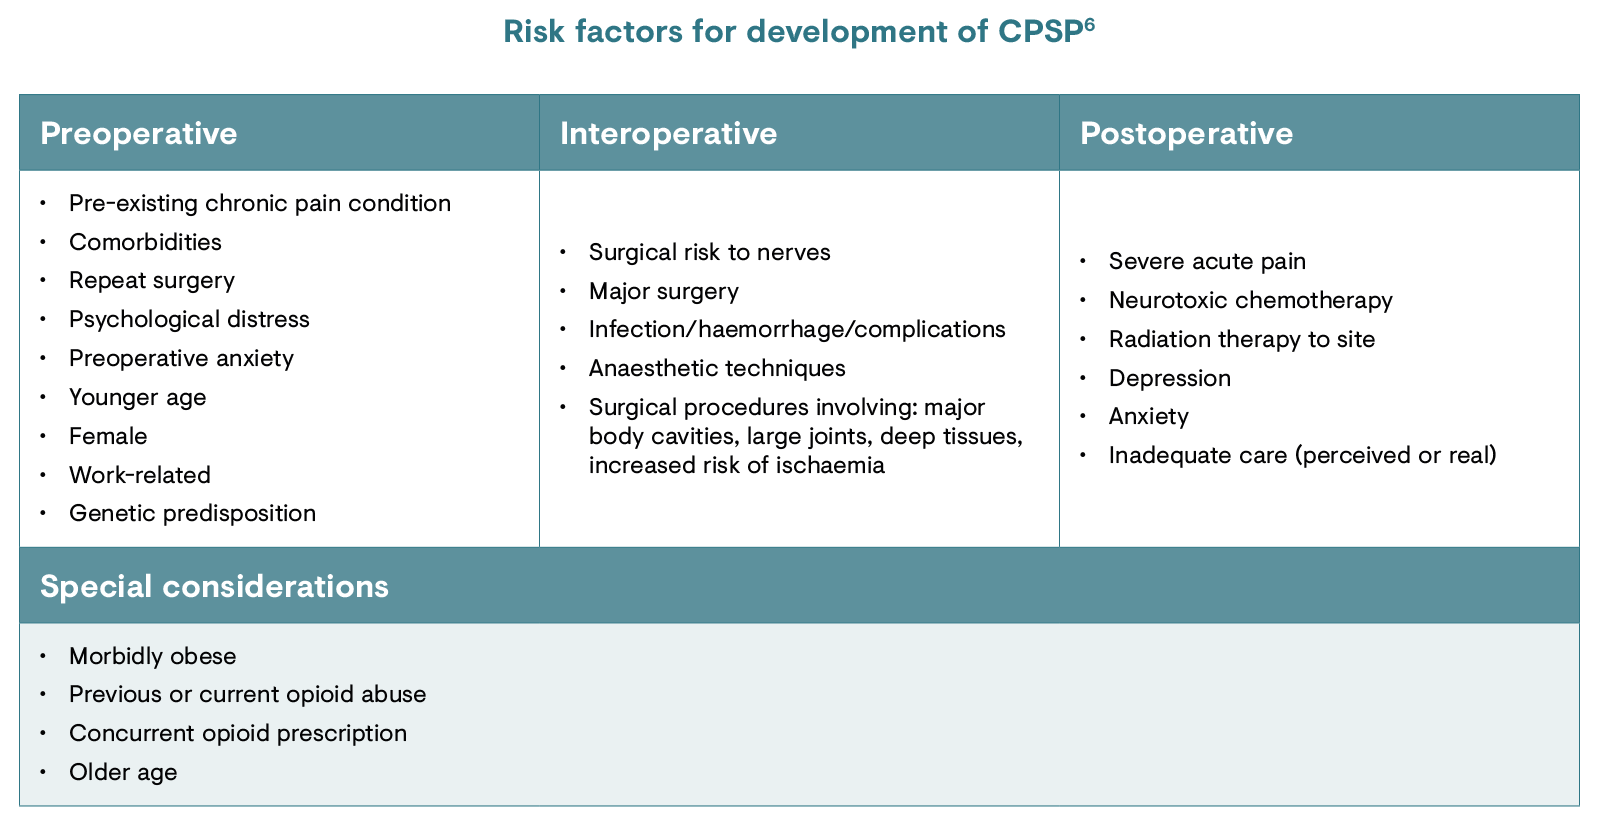 Risk factors for development of chronic post surgical pain